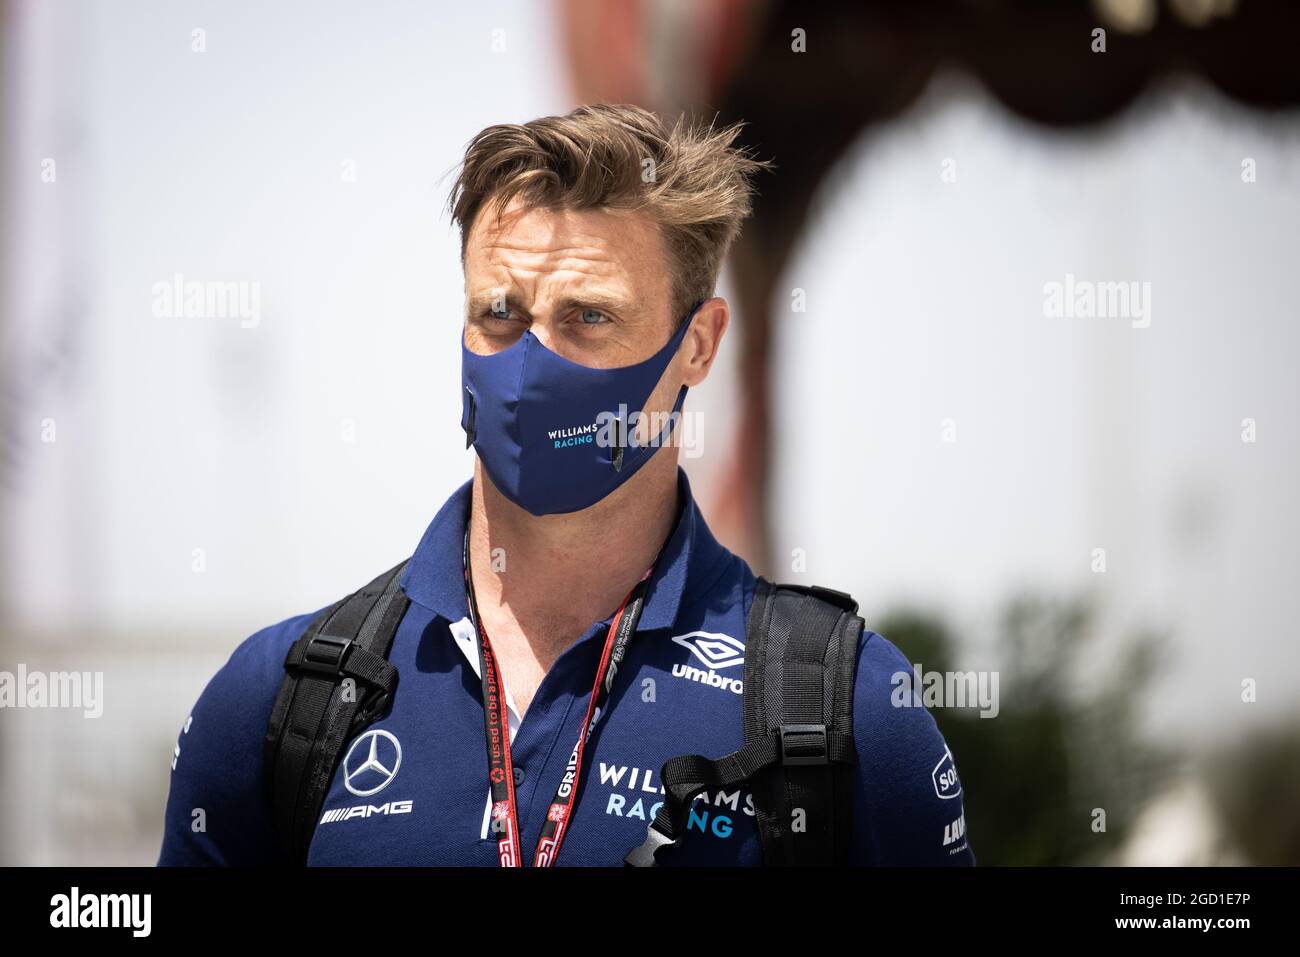 Williams racing performance coach -Fotos und -Bildmaterial in hoher  Auflösung – Alamy